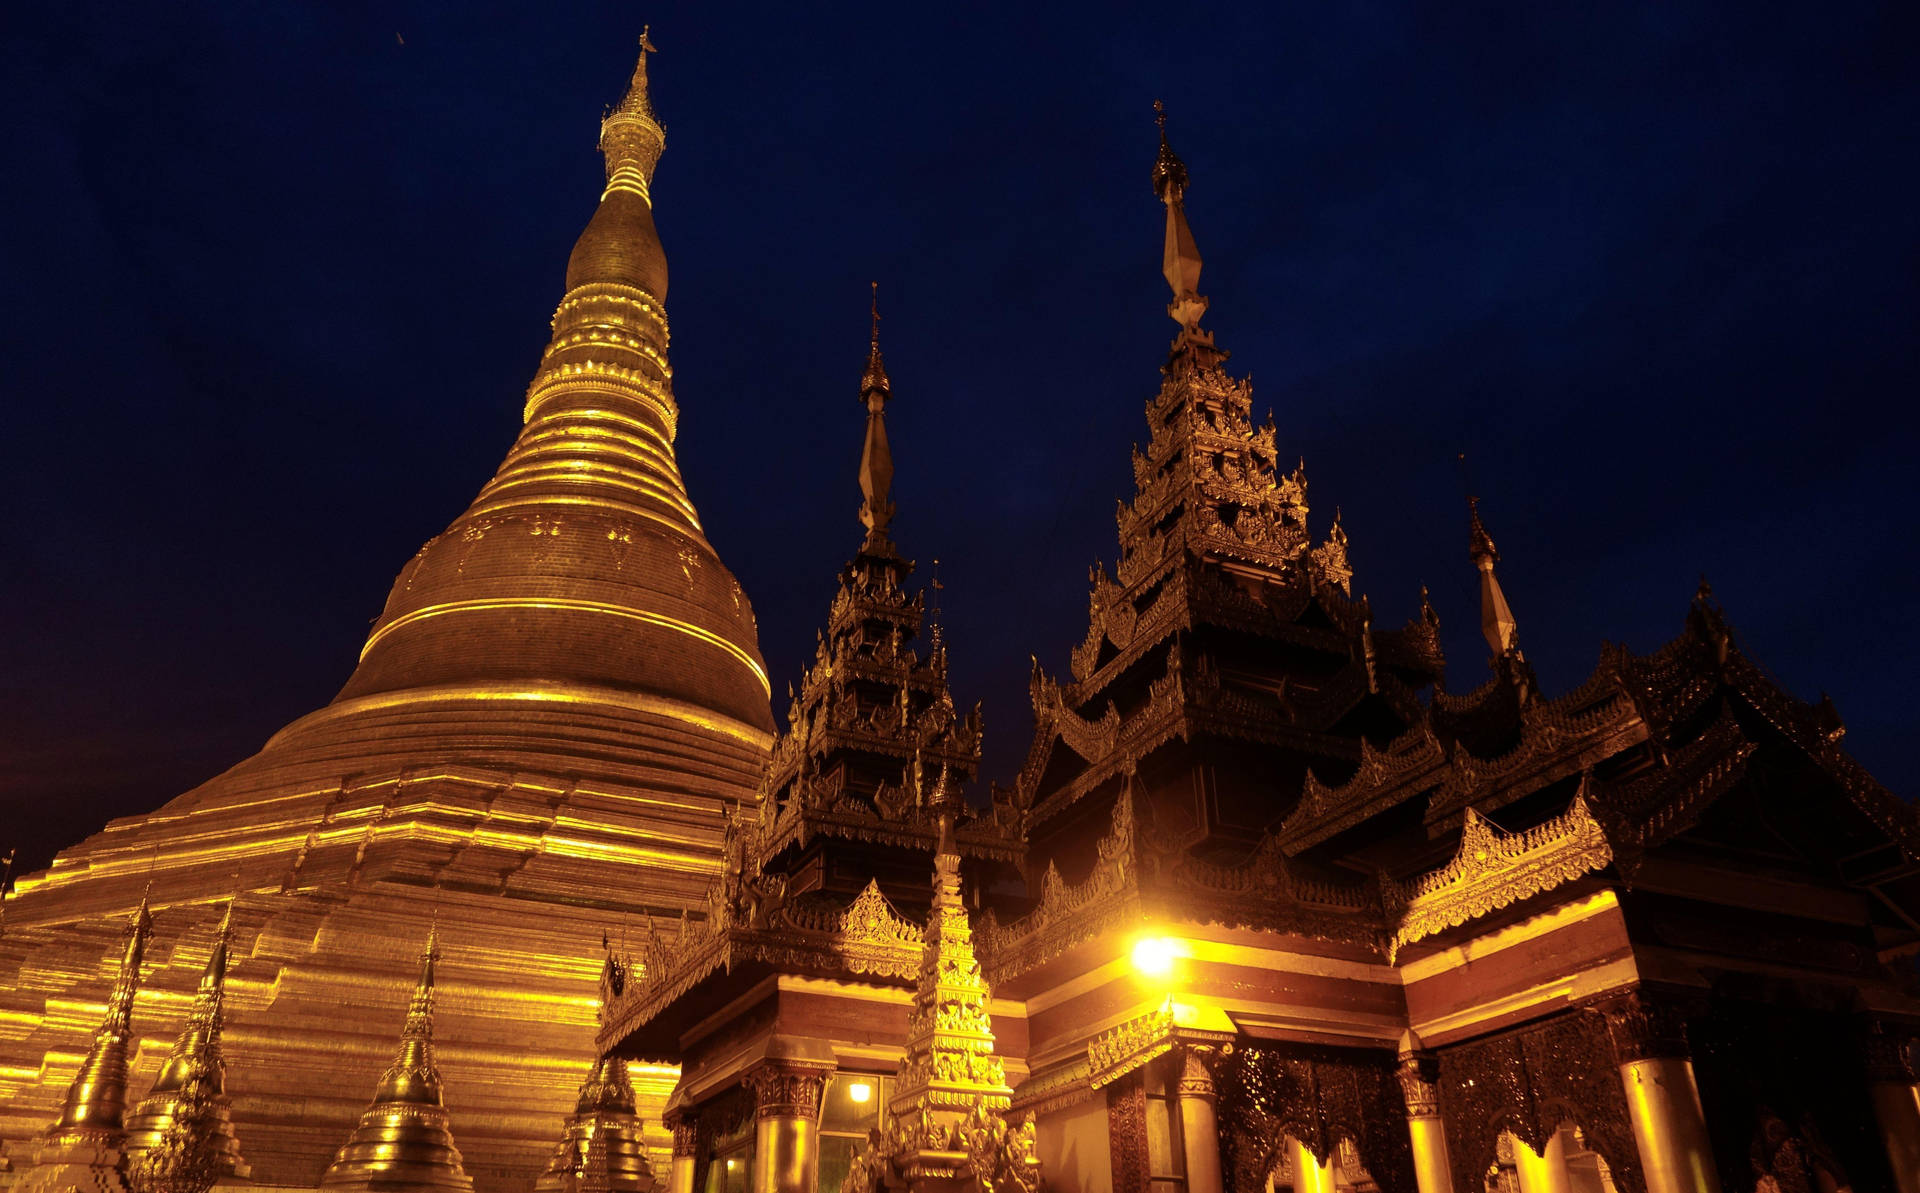 Golden Pagodas In Burma